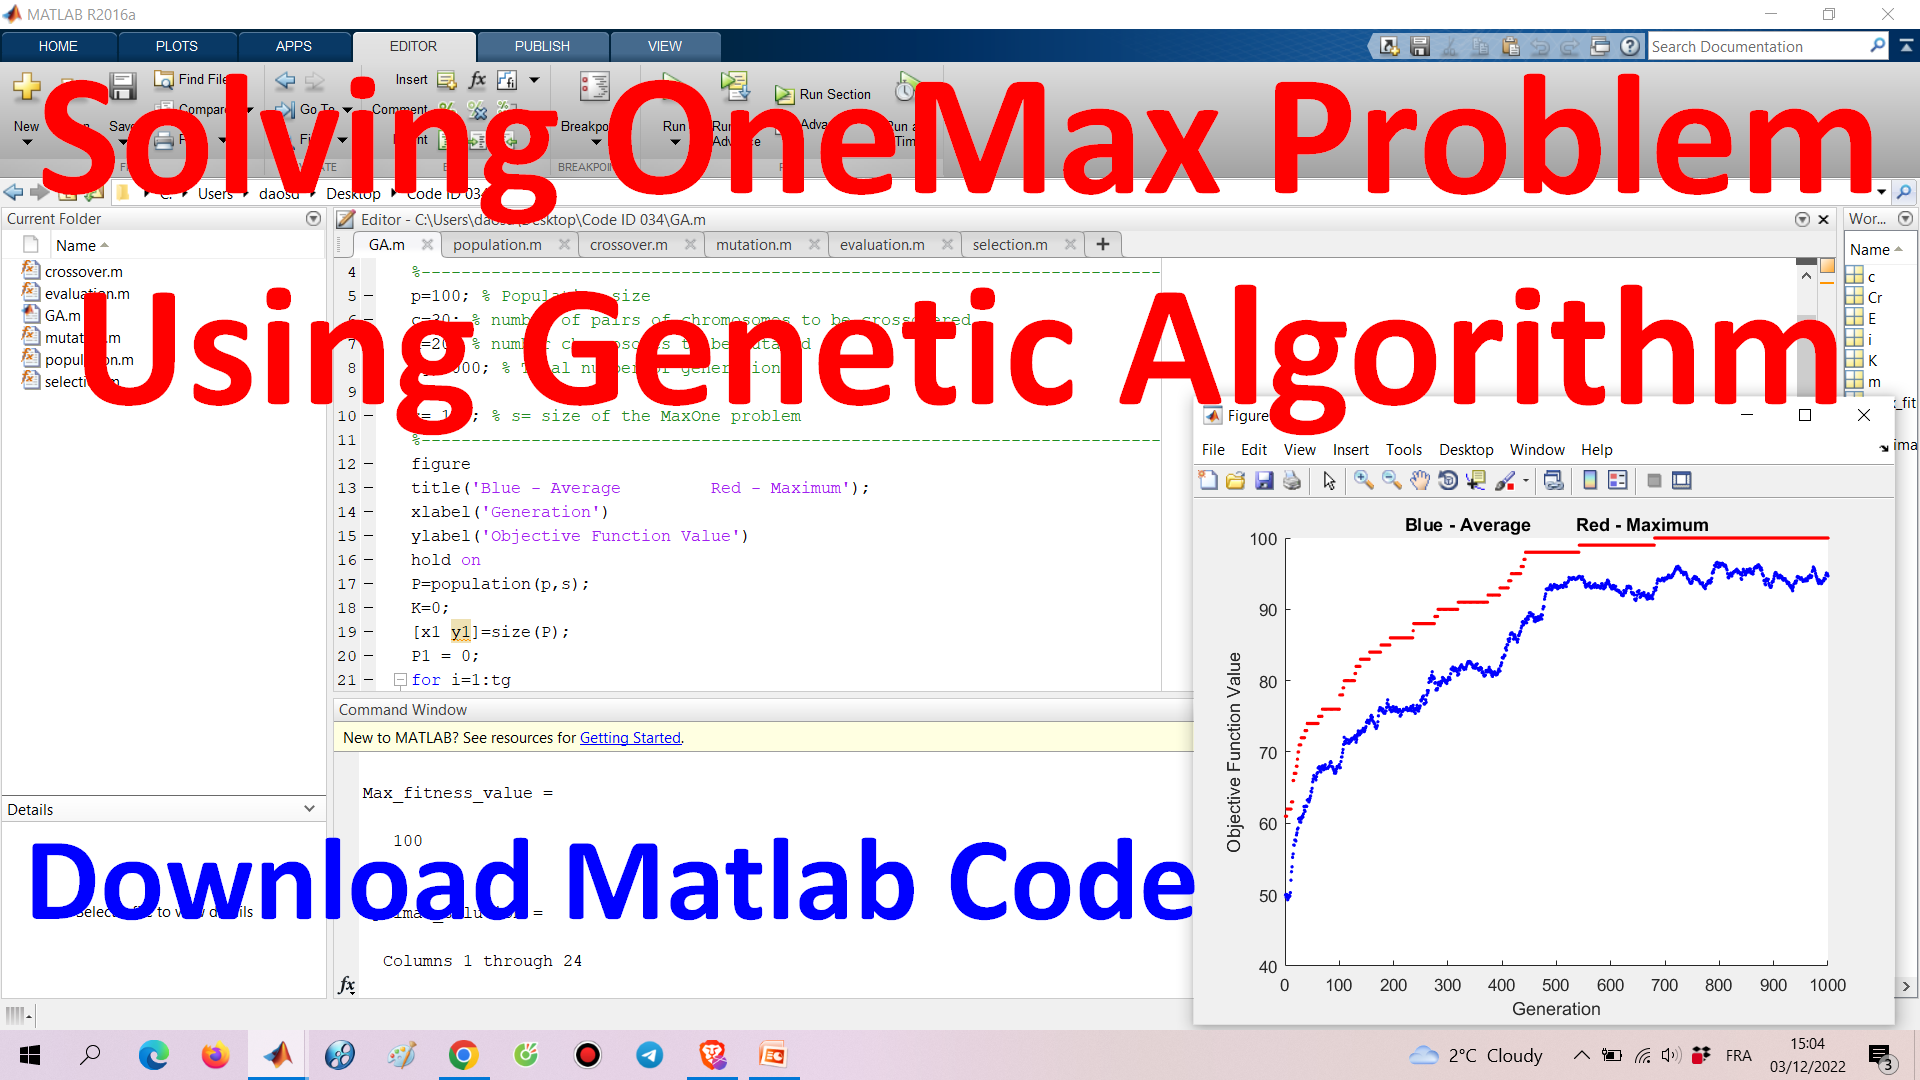 Solving OneMax Problem Using Genetic Algorithm in Matlab